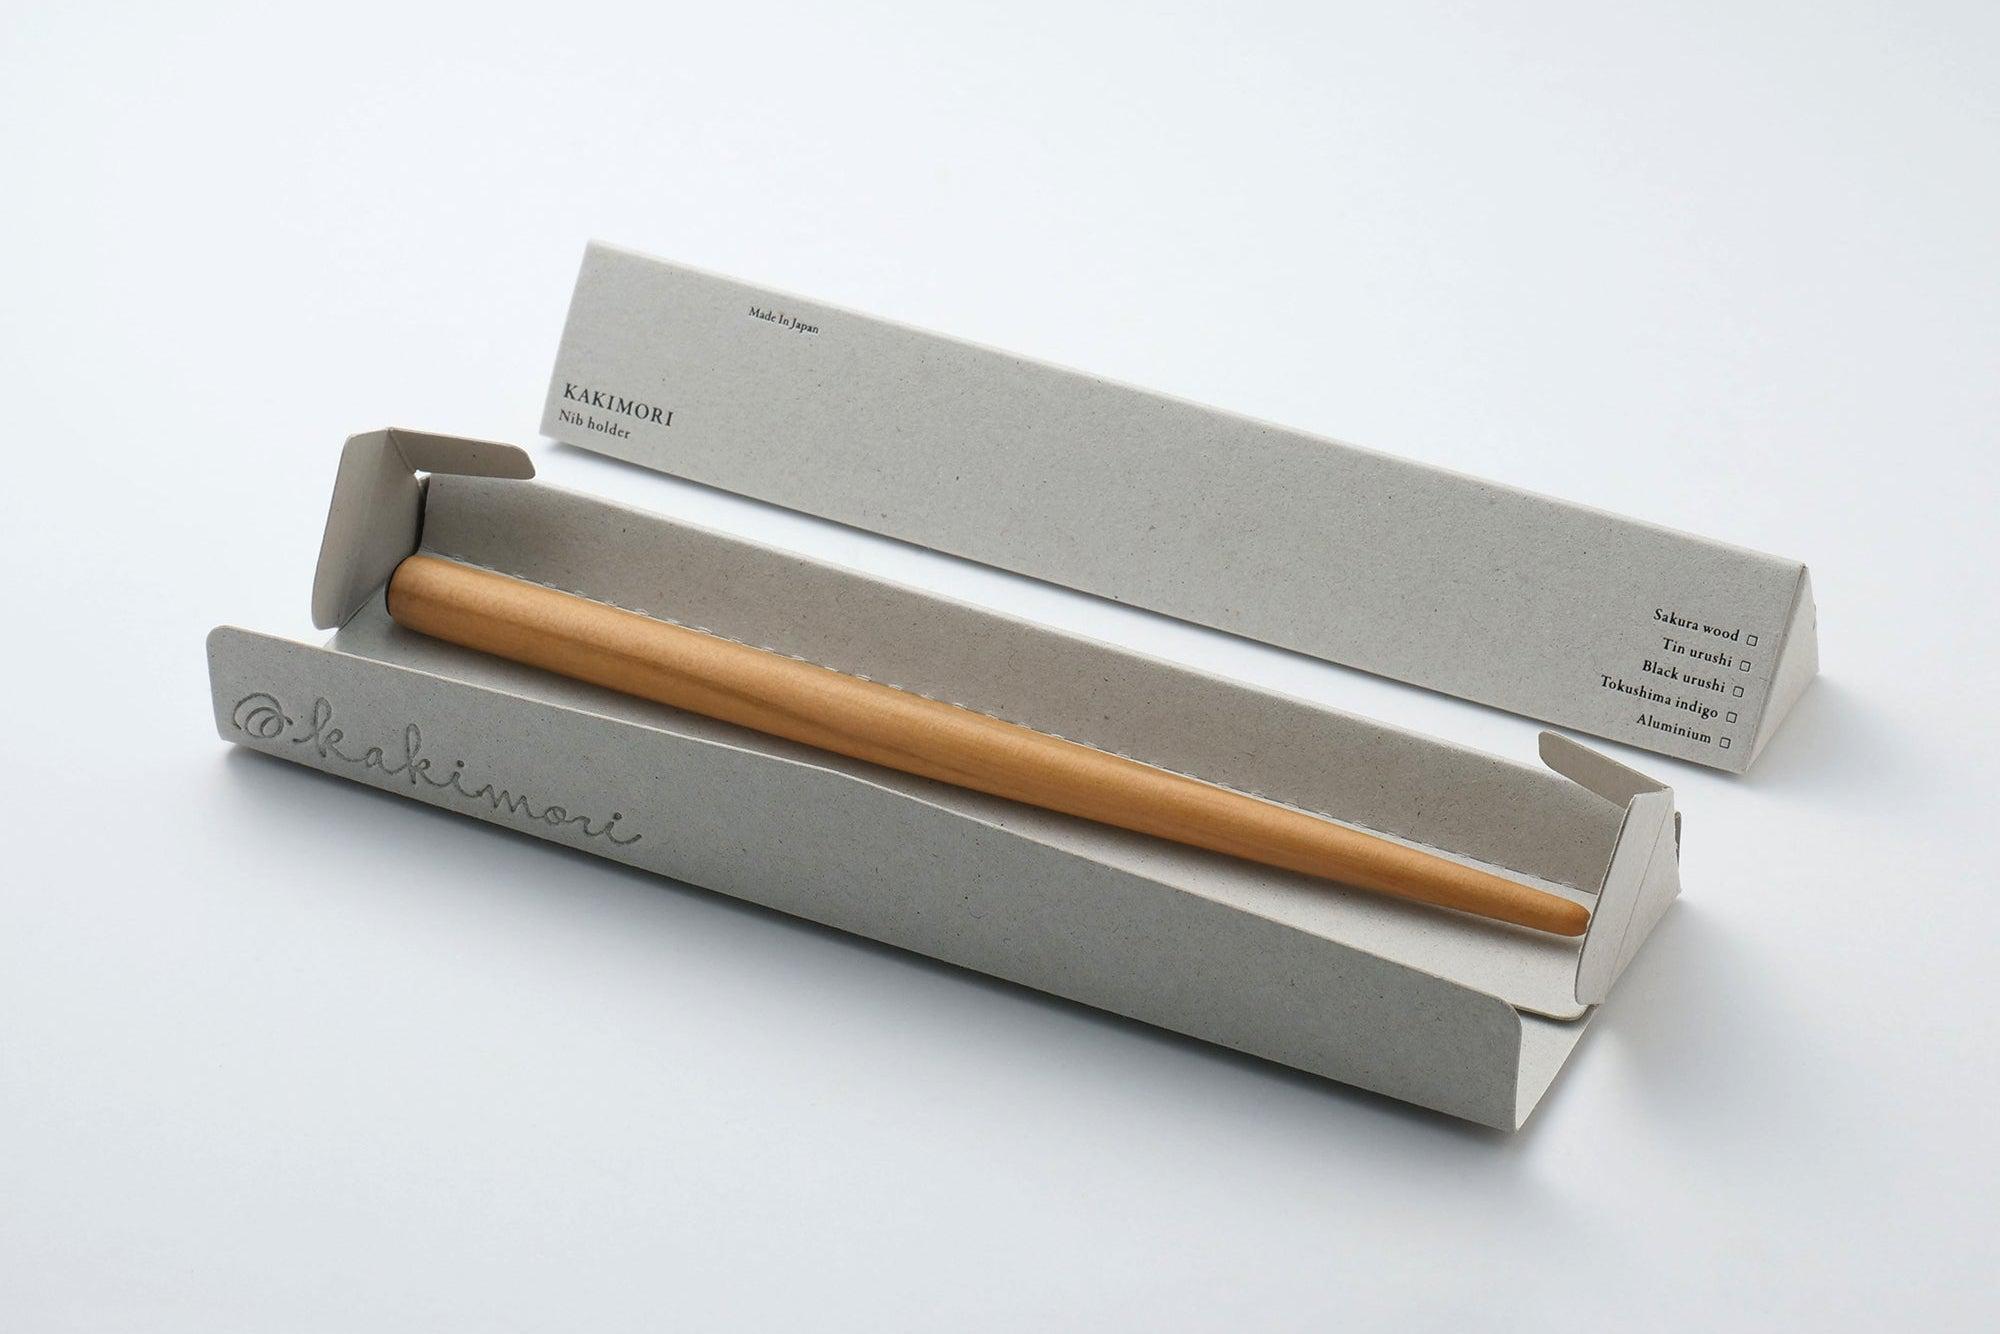 Kakimori Dip Pen Nib holder - Sakura wood